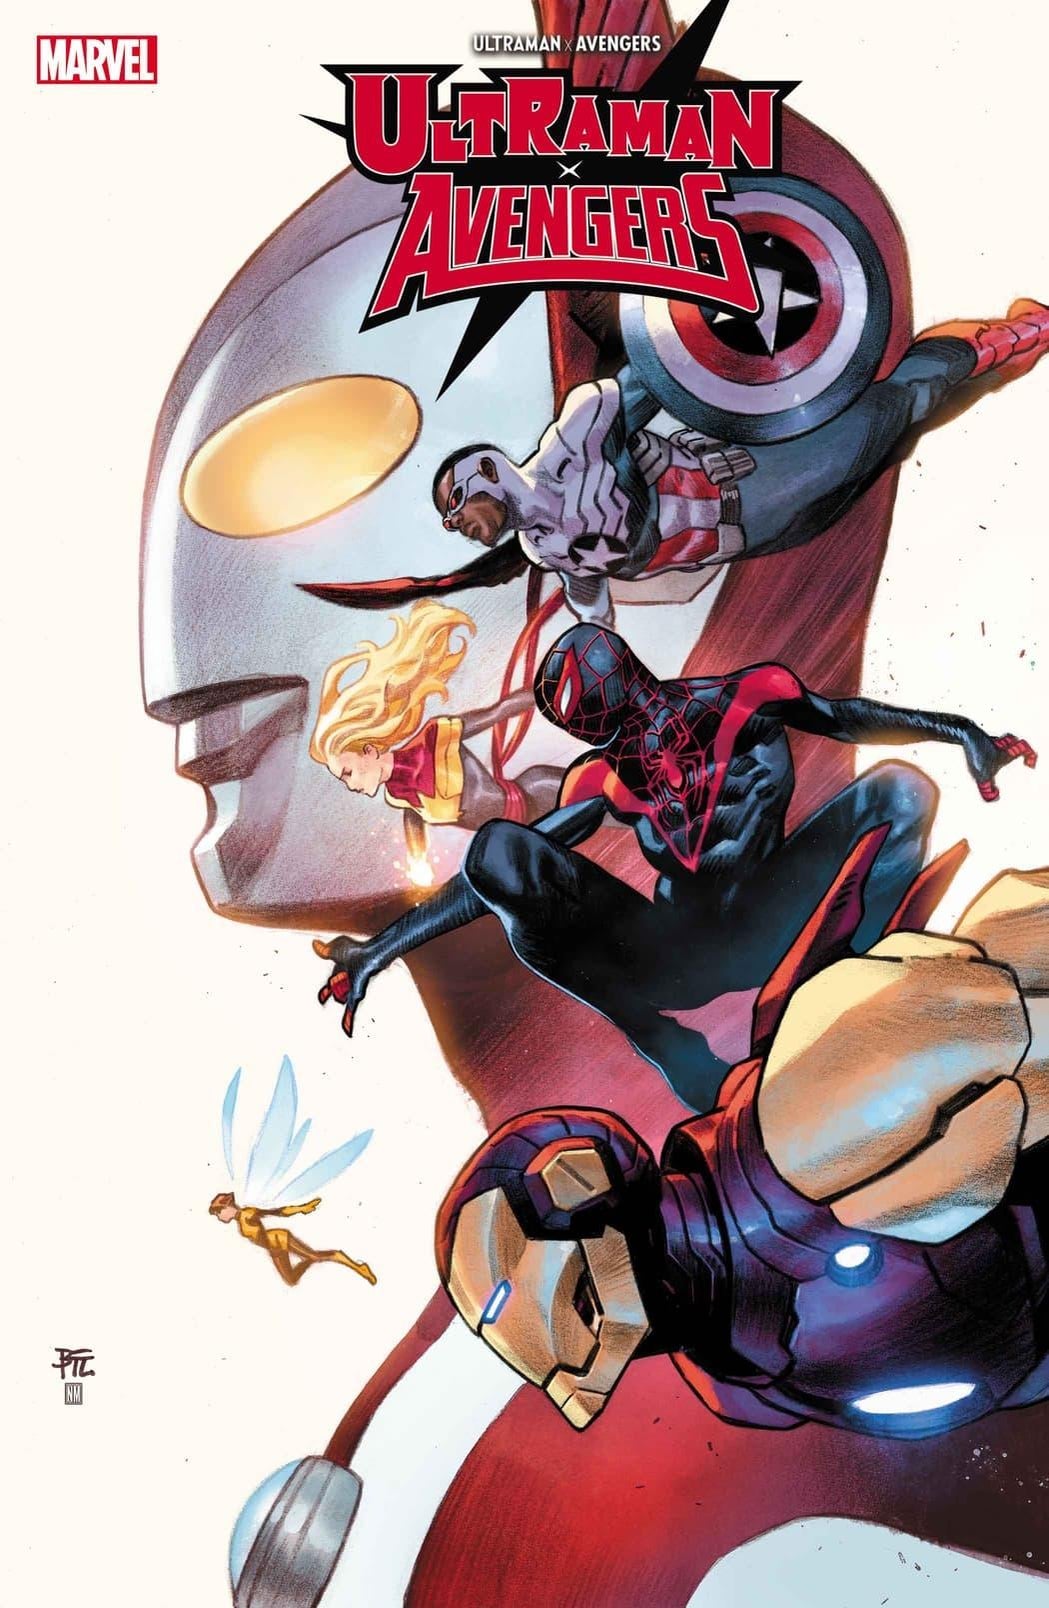 ultraman-x-avengers-crossover-marvel-comics.jpg